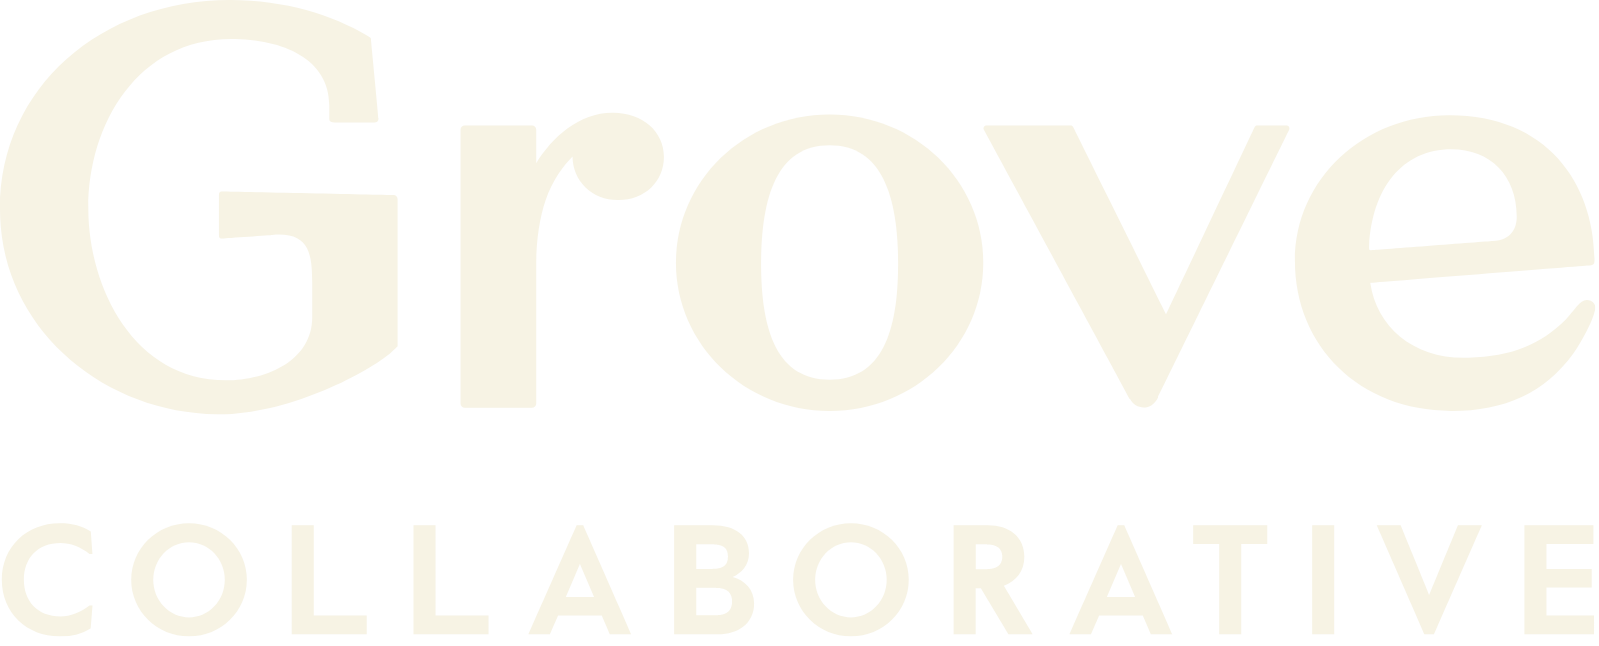 Grove Collaborative Logo groß für dunkle Hintergründe (transparentes PNG)